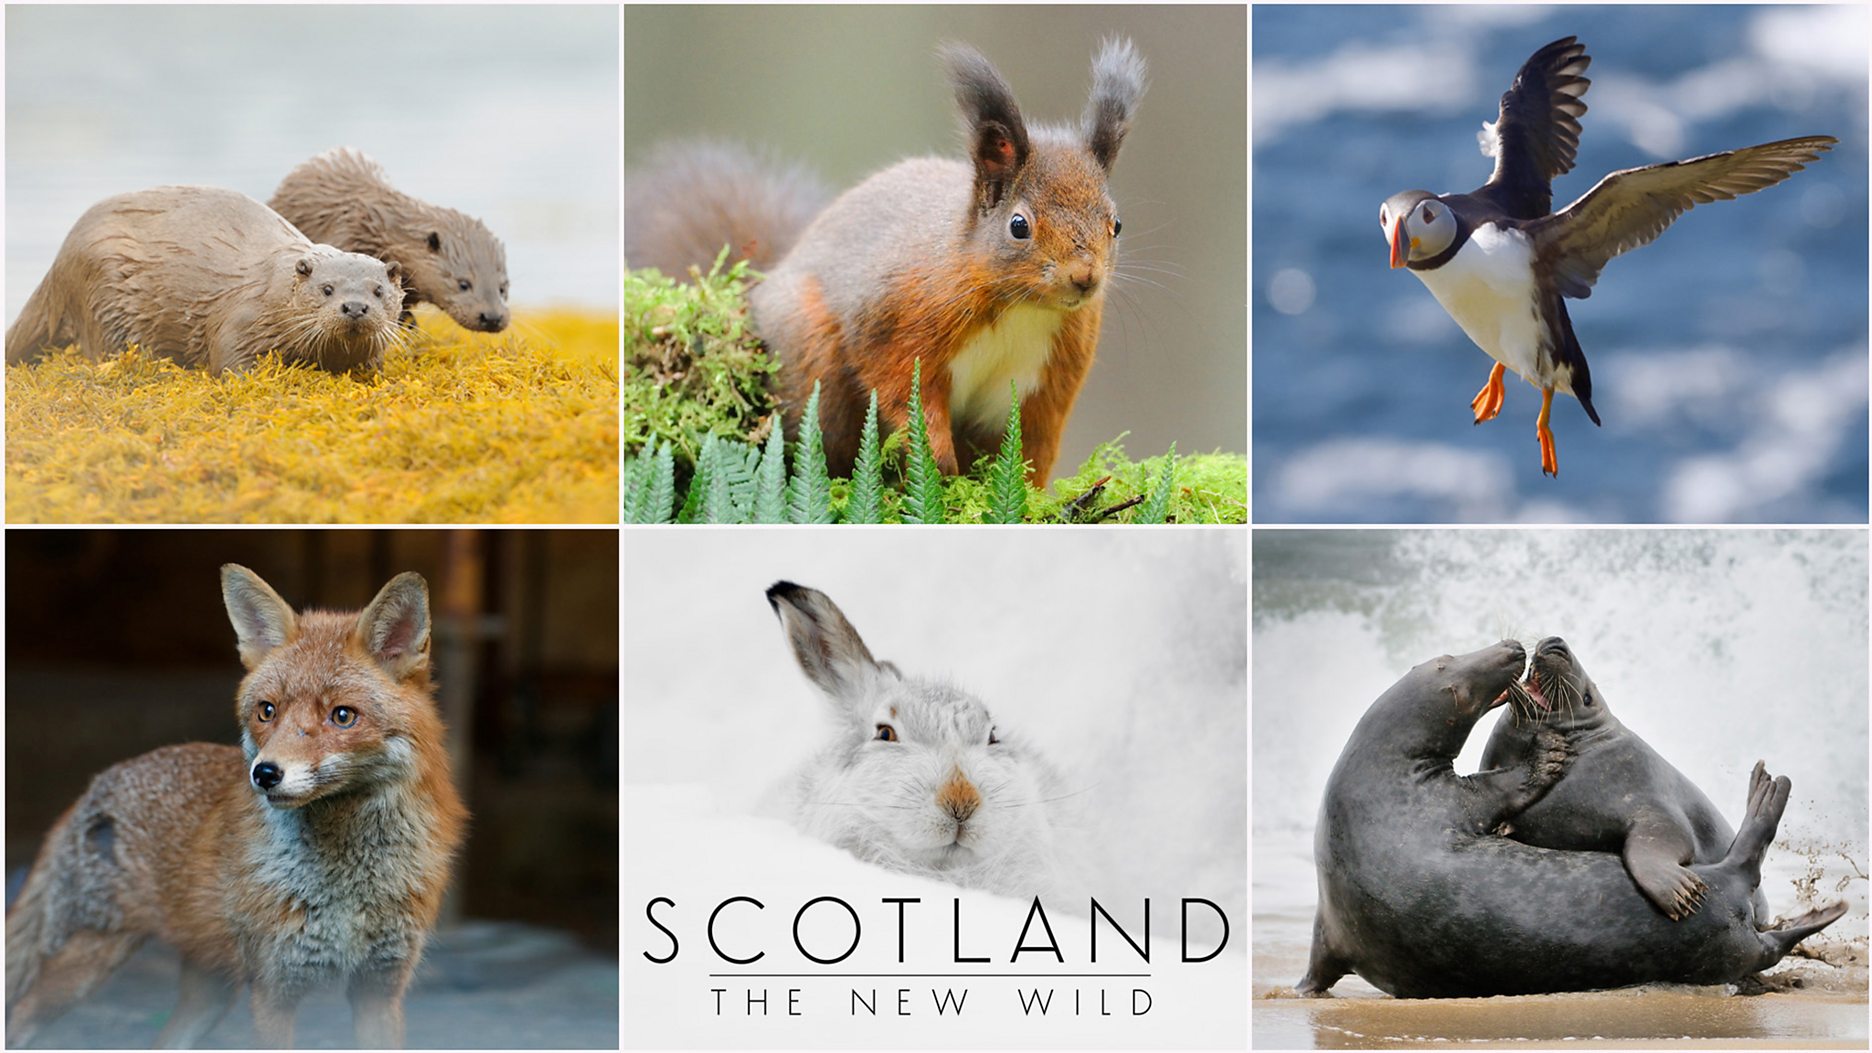 Scotland The New Wild offers a "breath-taking portrait of Scotland's wildlife"